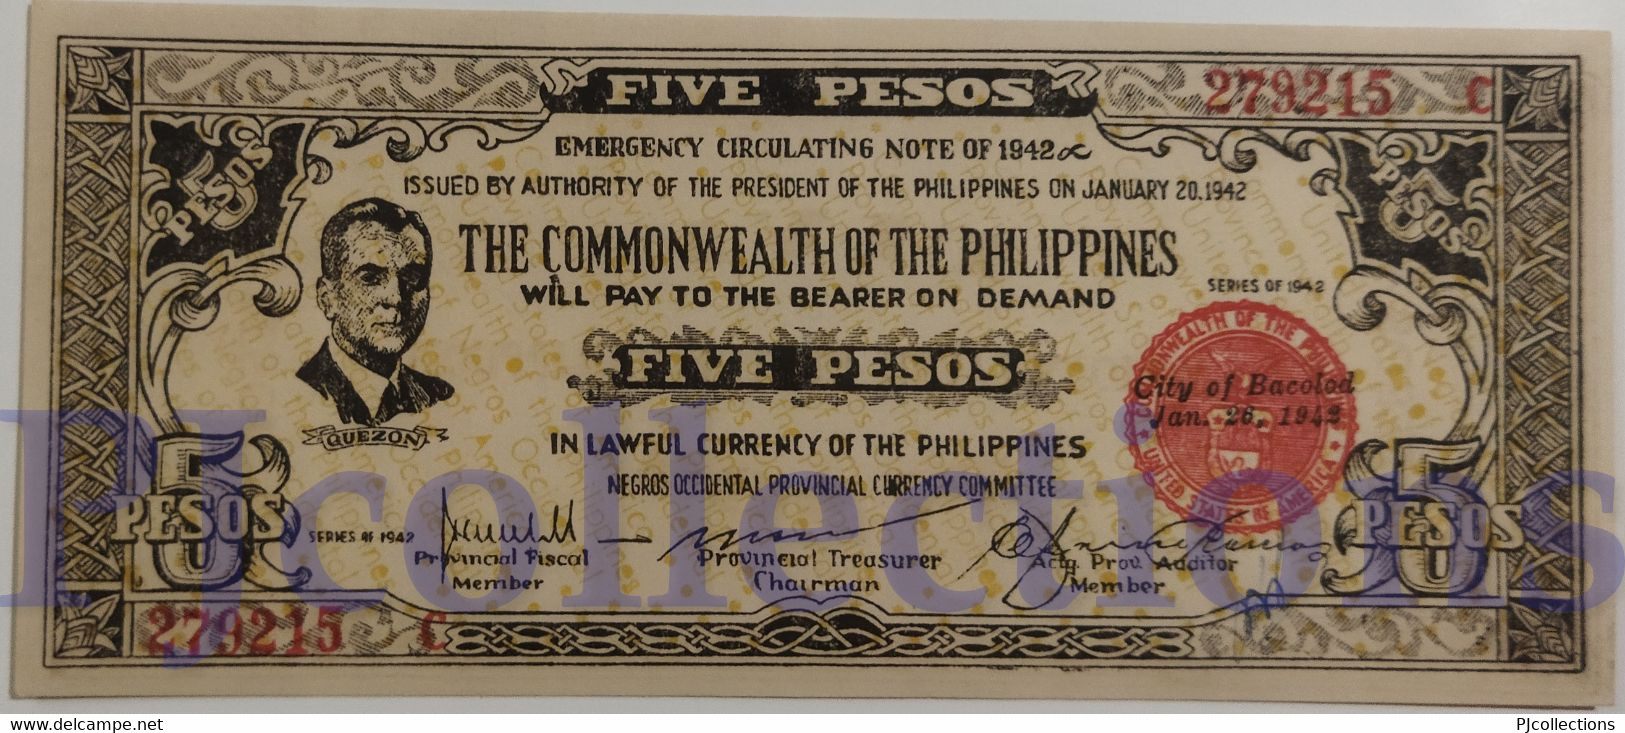 PHILIPPINES 5 PESOS 1942 PICK S648b UNC EMERGENCY BANKNOTE - Philippines